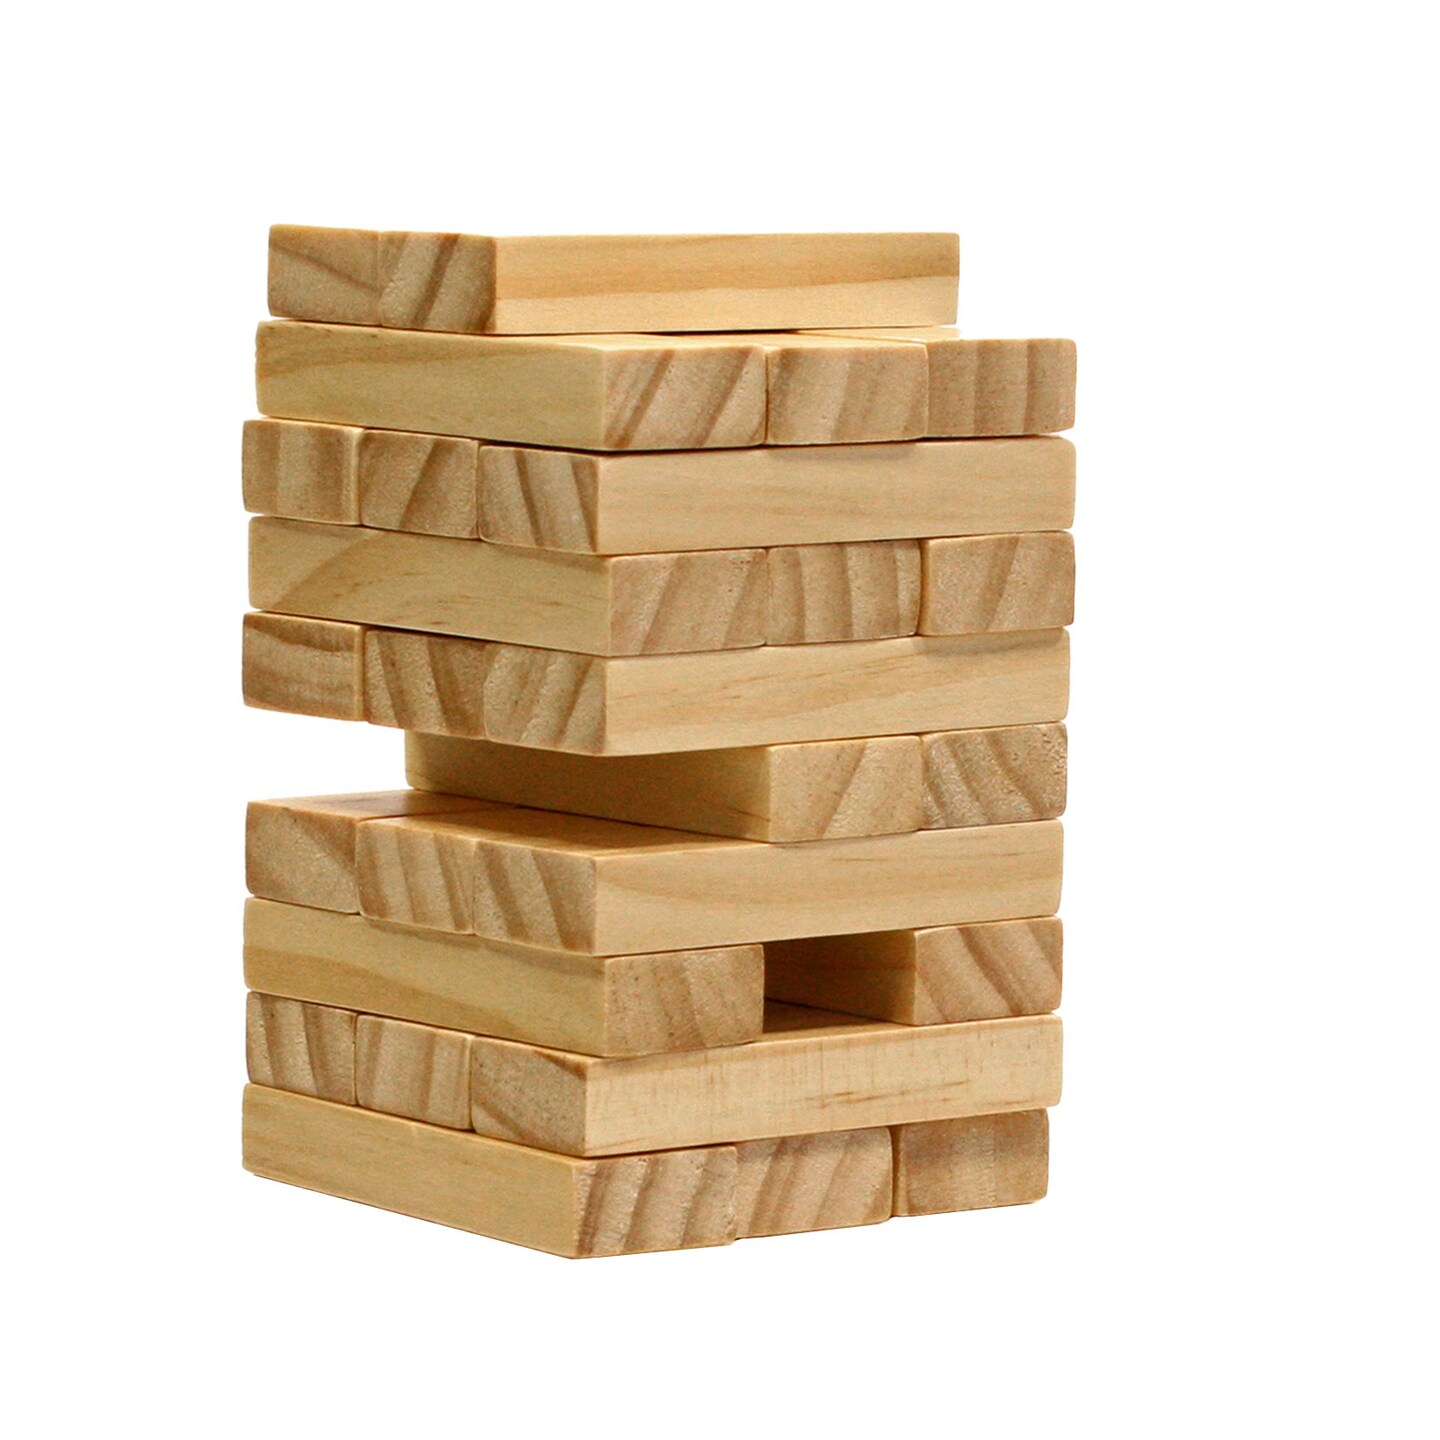 WE Games Wooden Blocks Stacking Tower Game, Short Stack